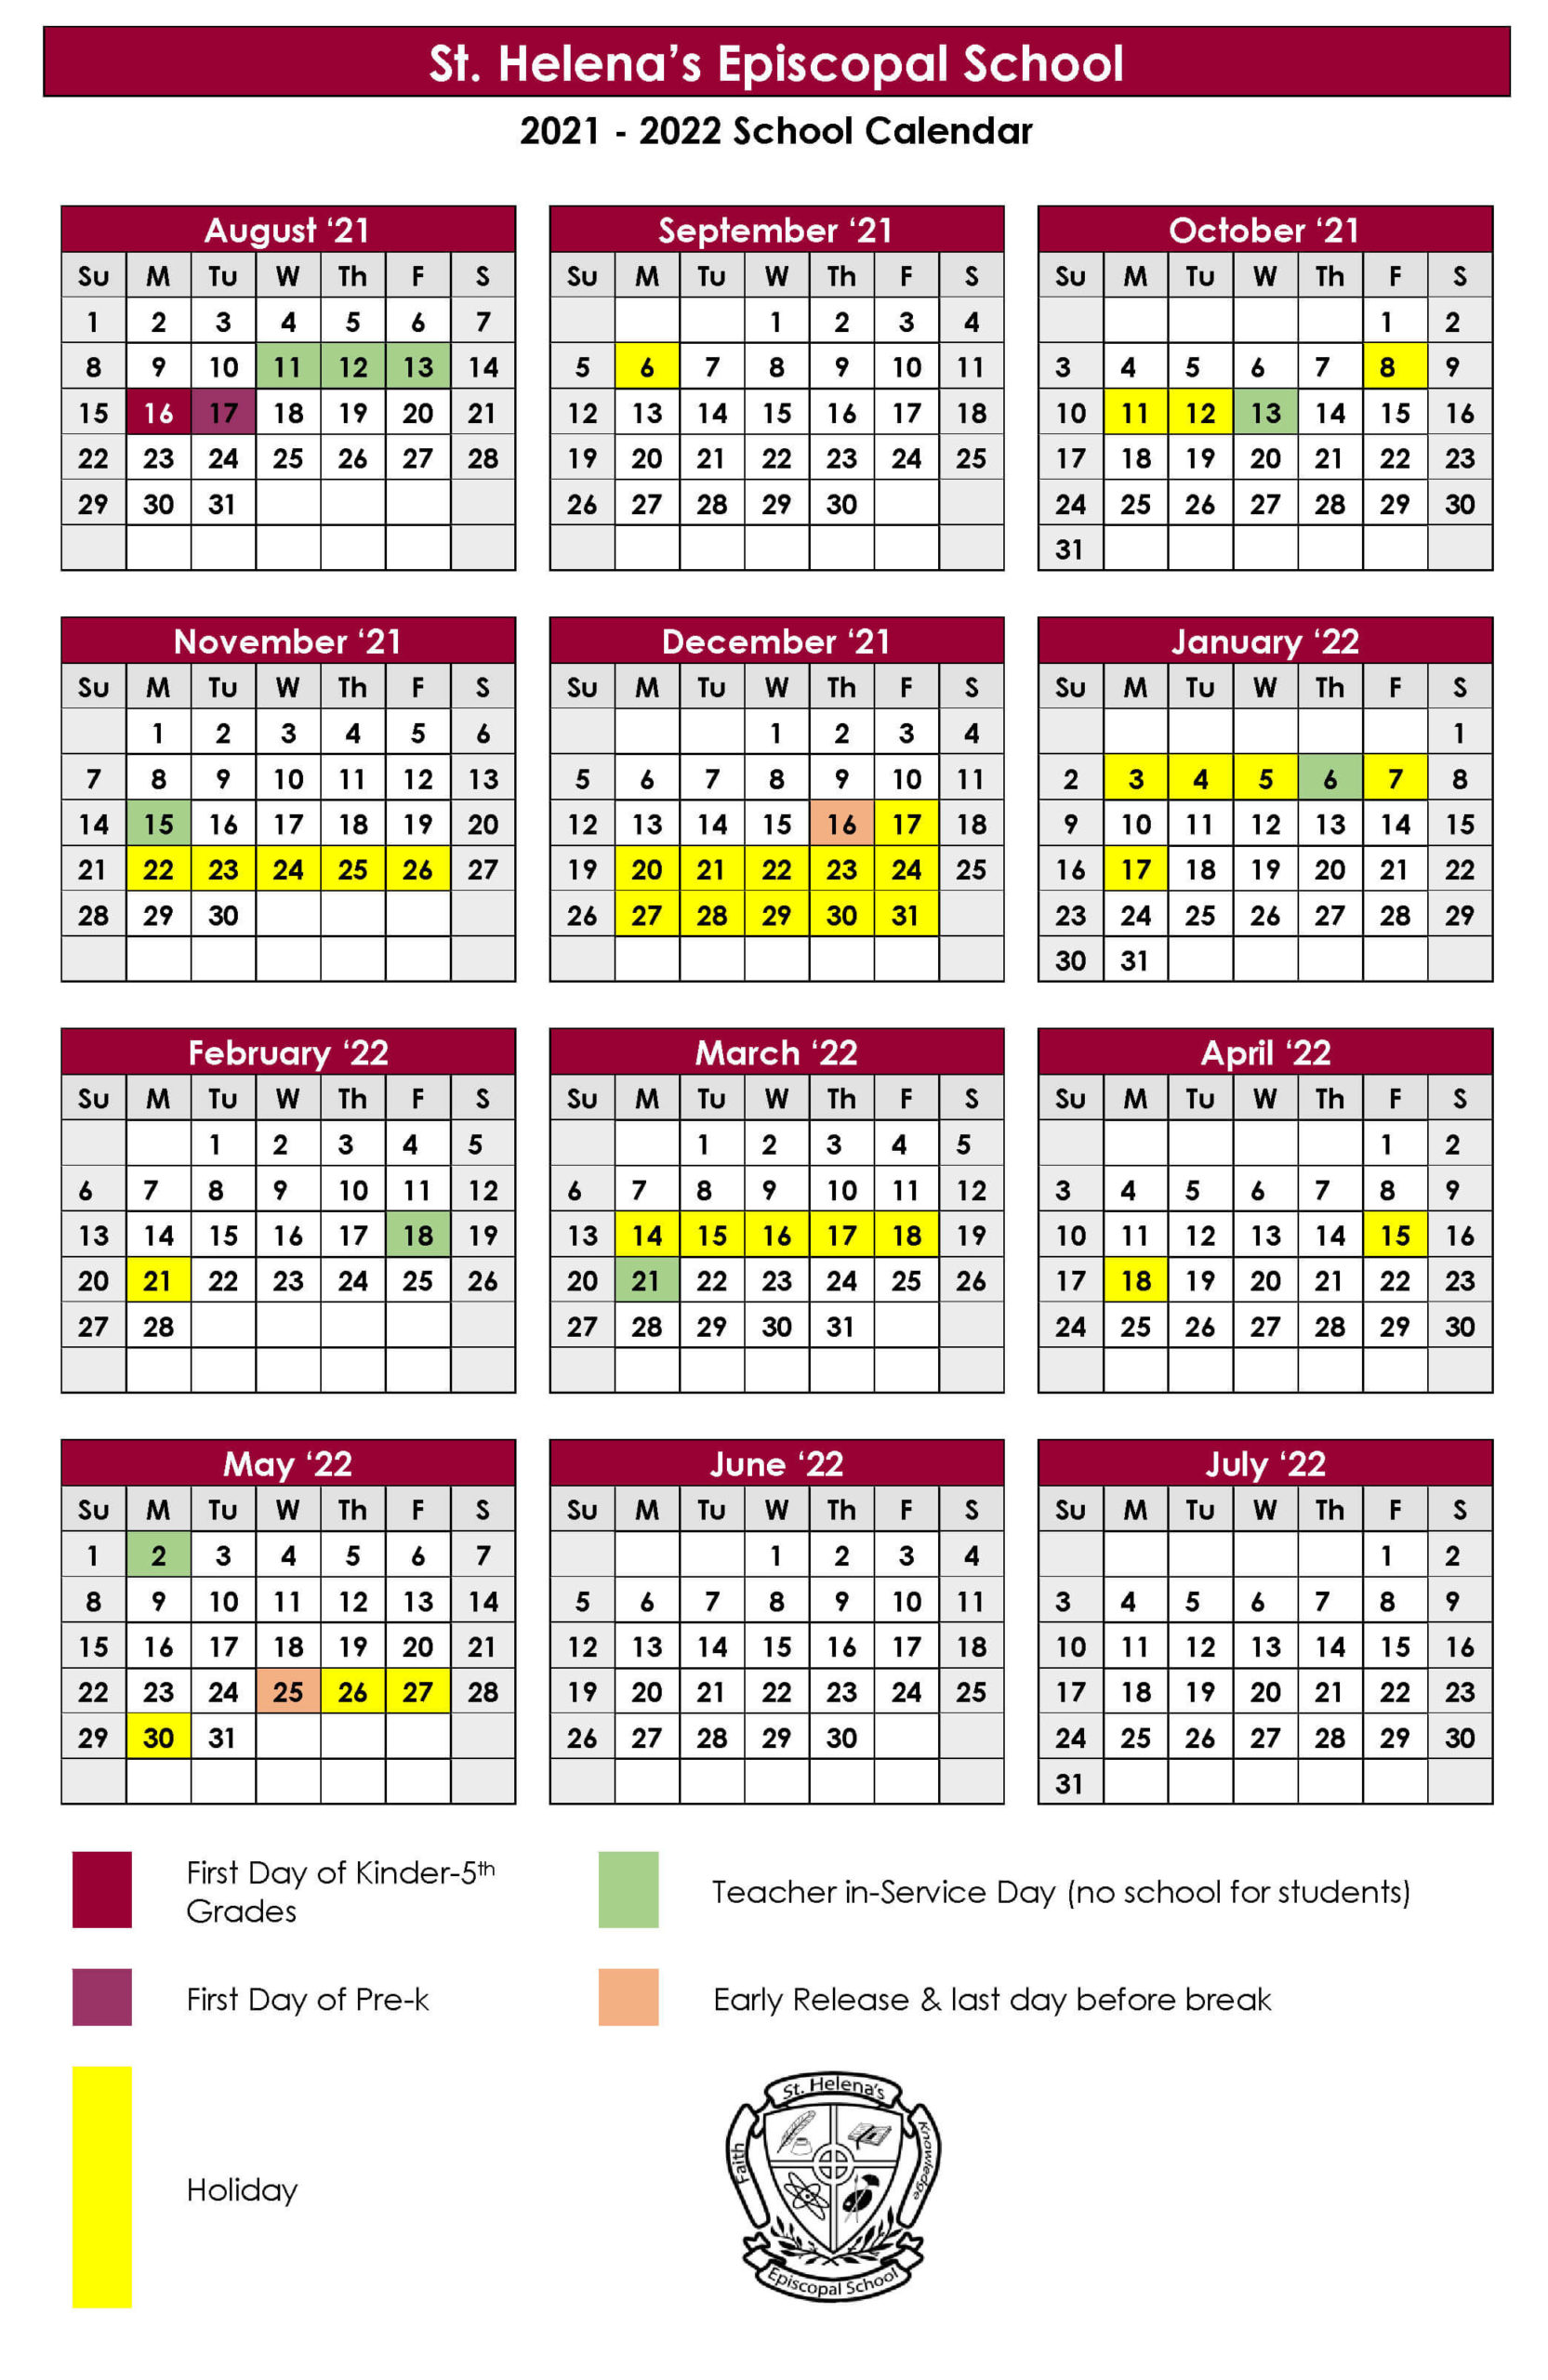 calender-st-helena-s-episcopal-school-event-school-calendar